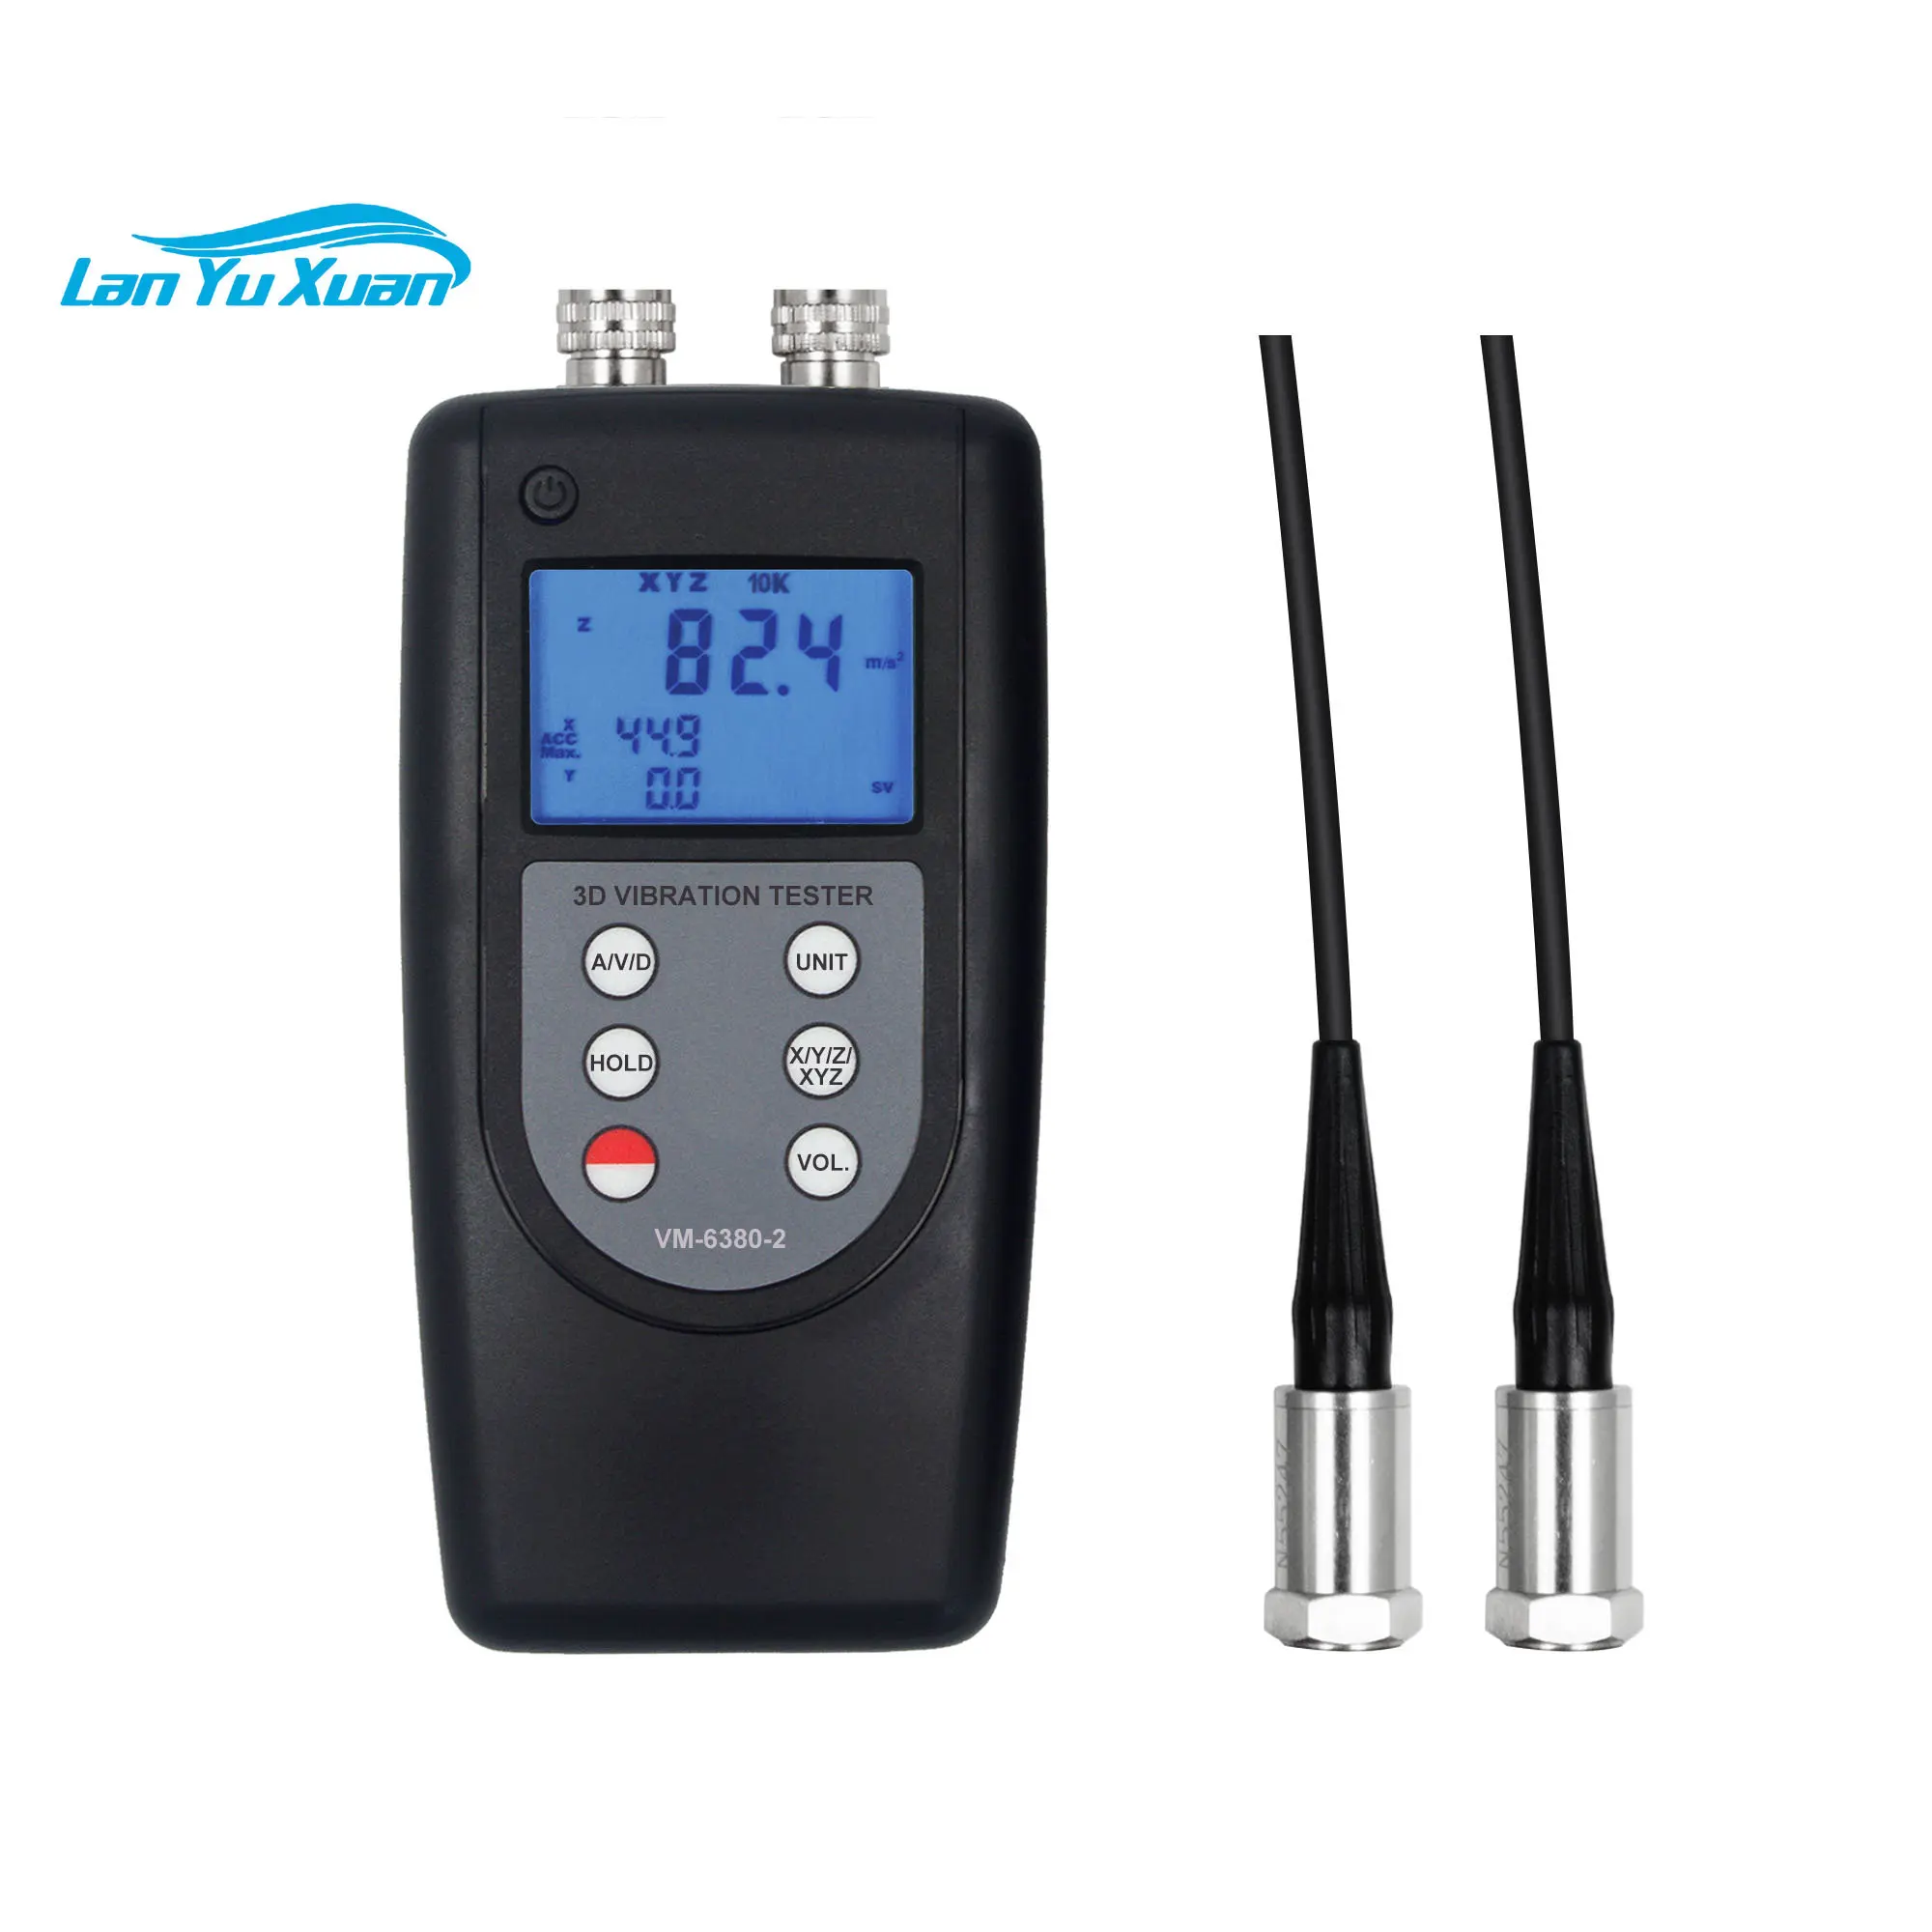 

VM-6380-2 Vibration Meter 2 Channel Vibration Analyzer Economical Price